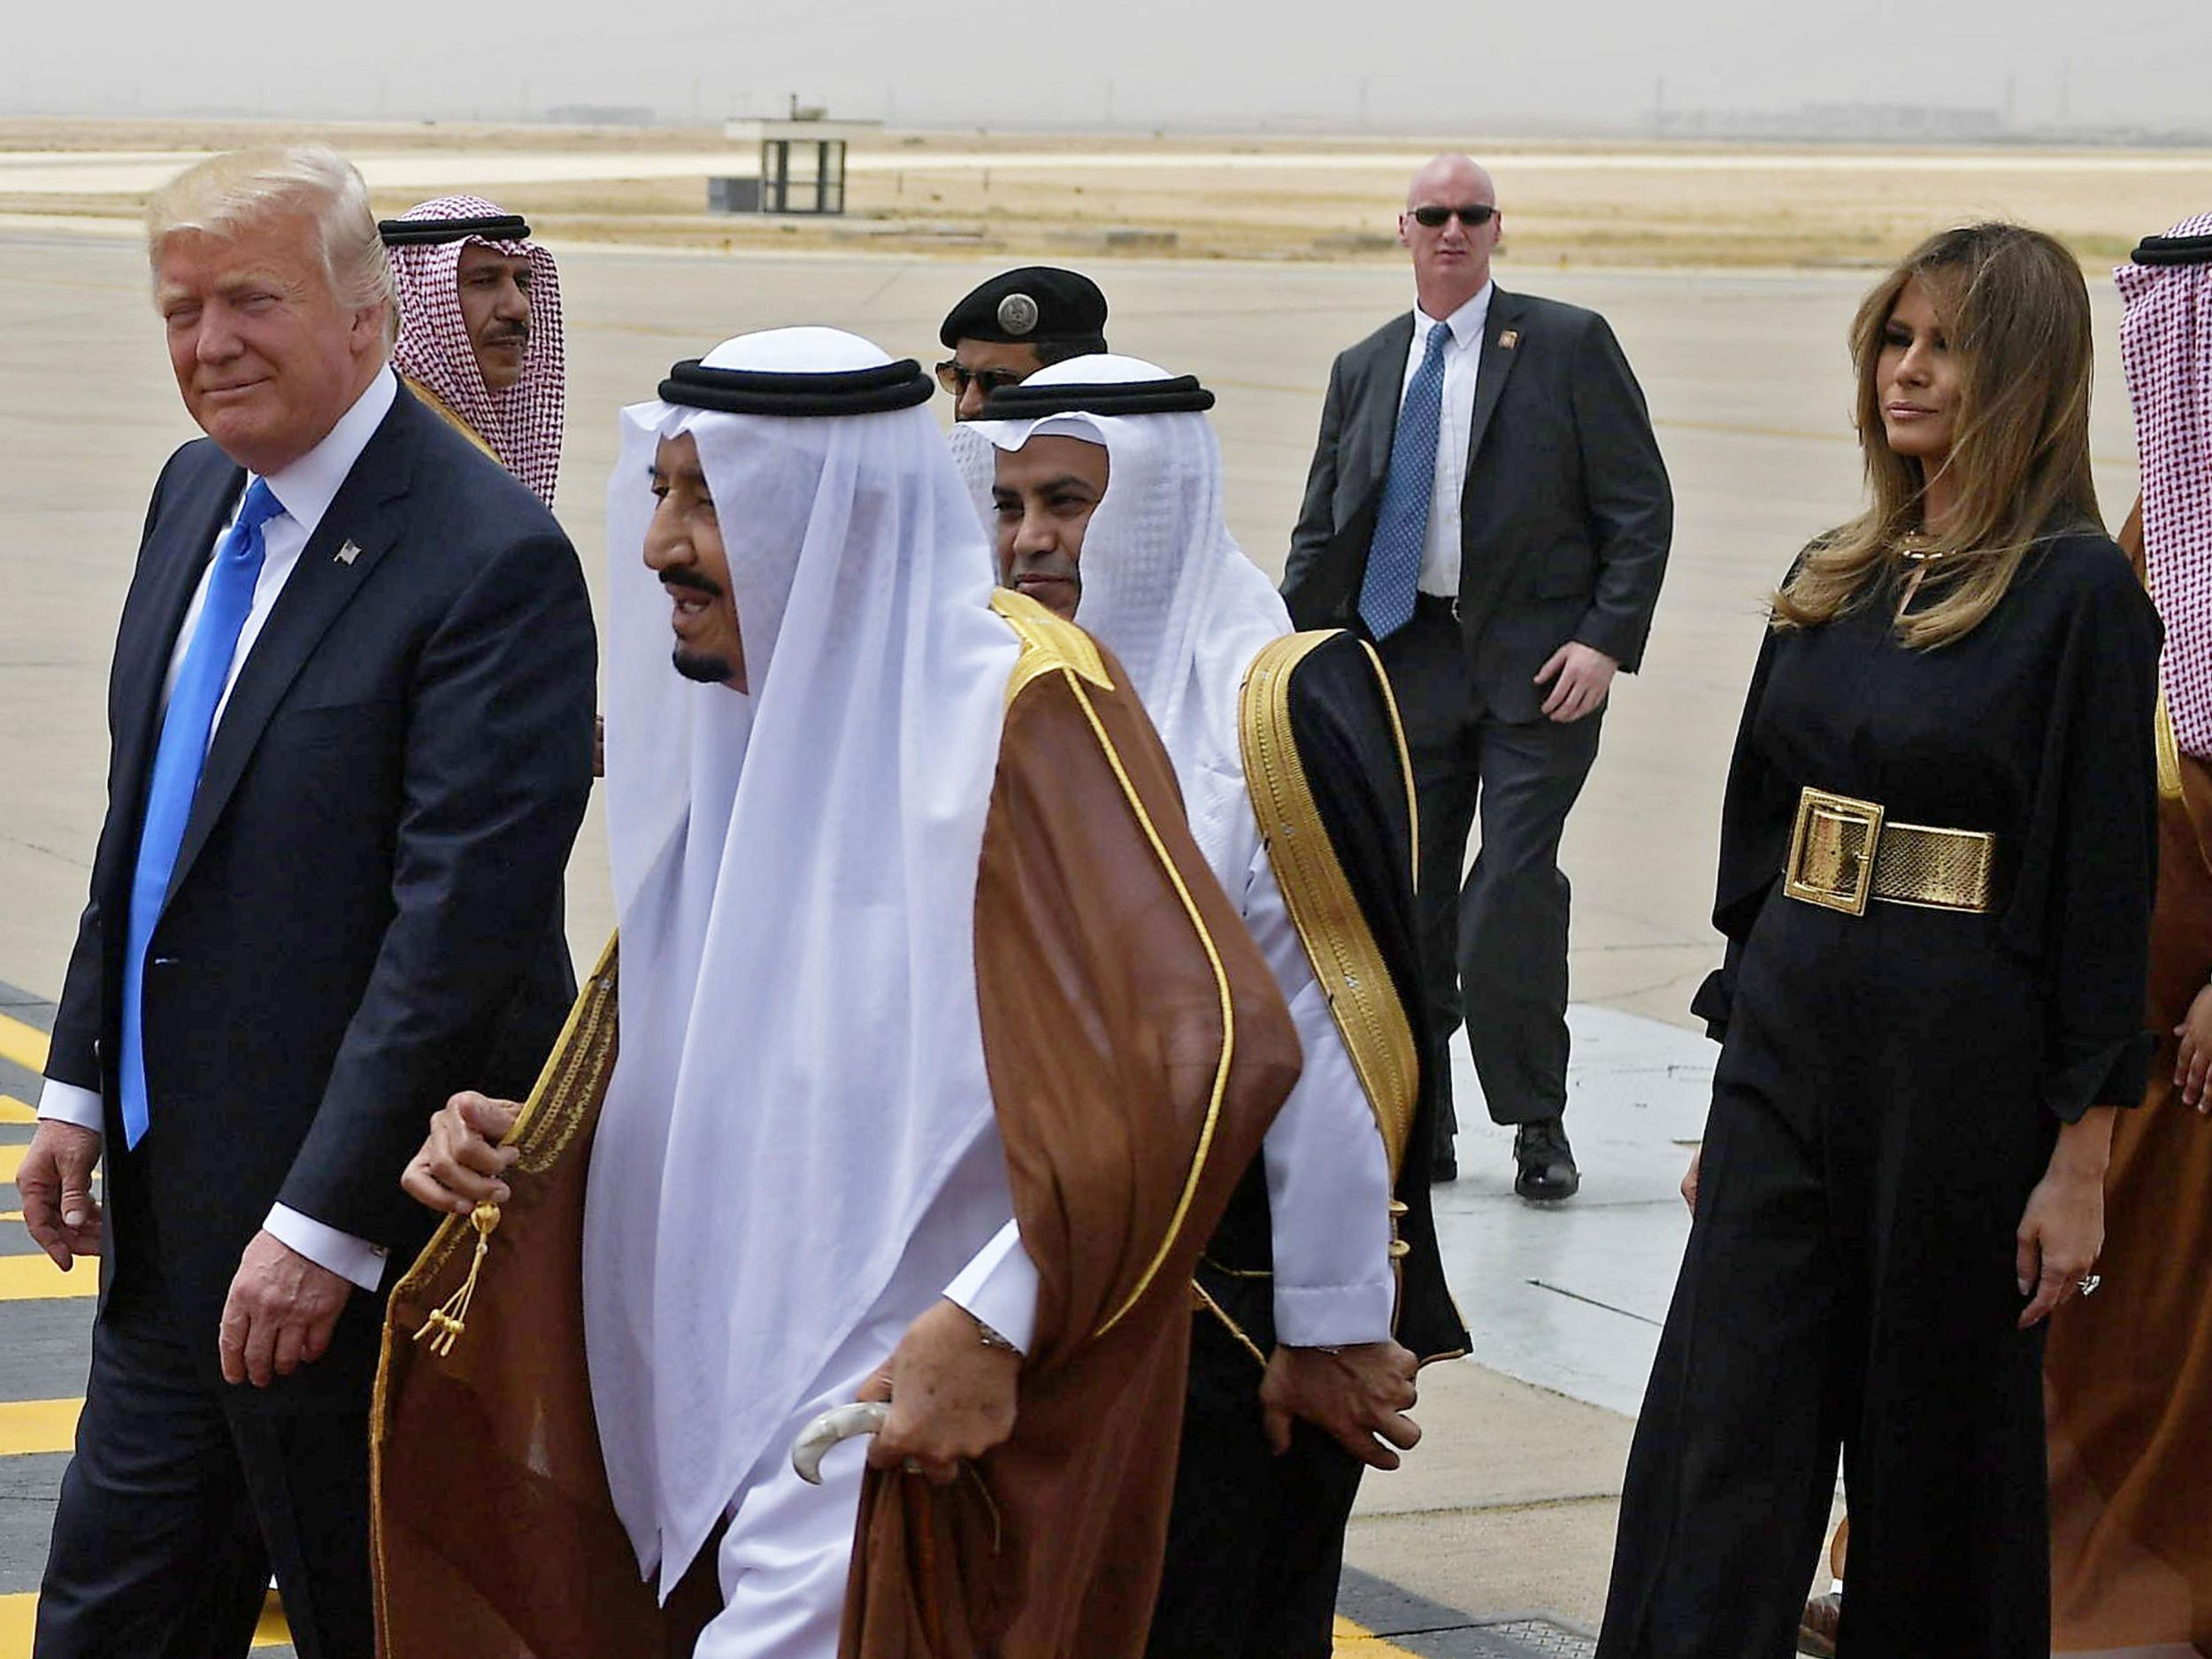 Donald Trump is welcomed by Saudi King Salman bin Abdulaziz al-Saud after arriving in Riyadh with his wife Melania